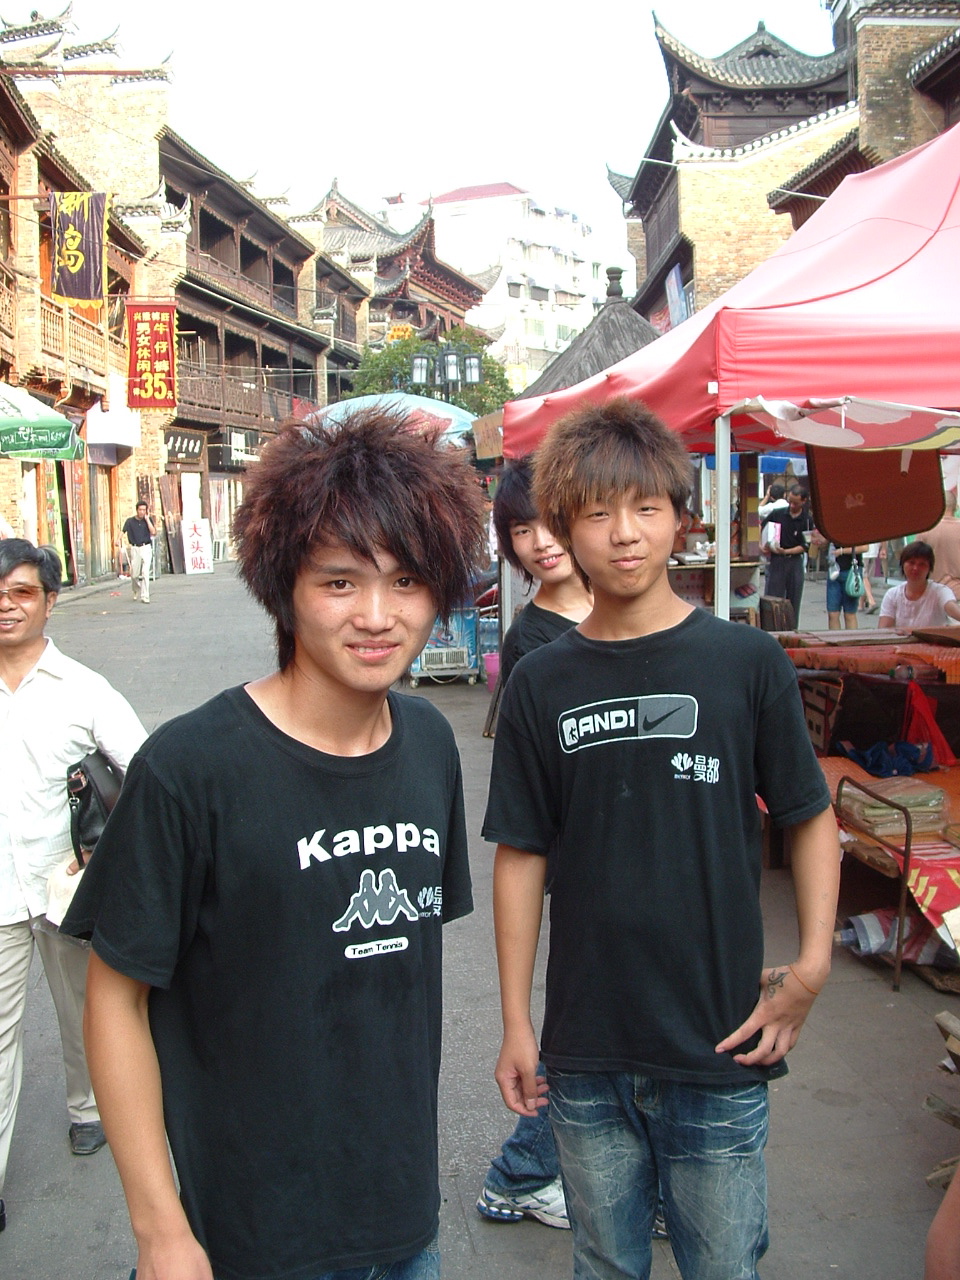  Teenagers hawking haircuts   